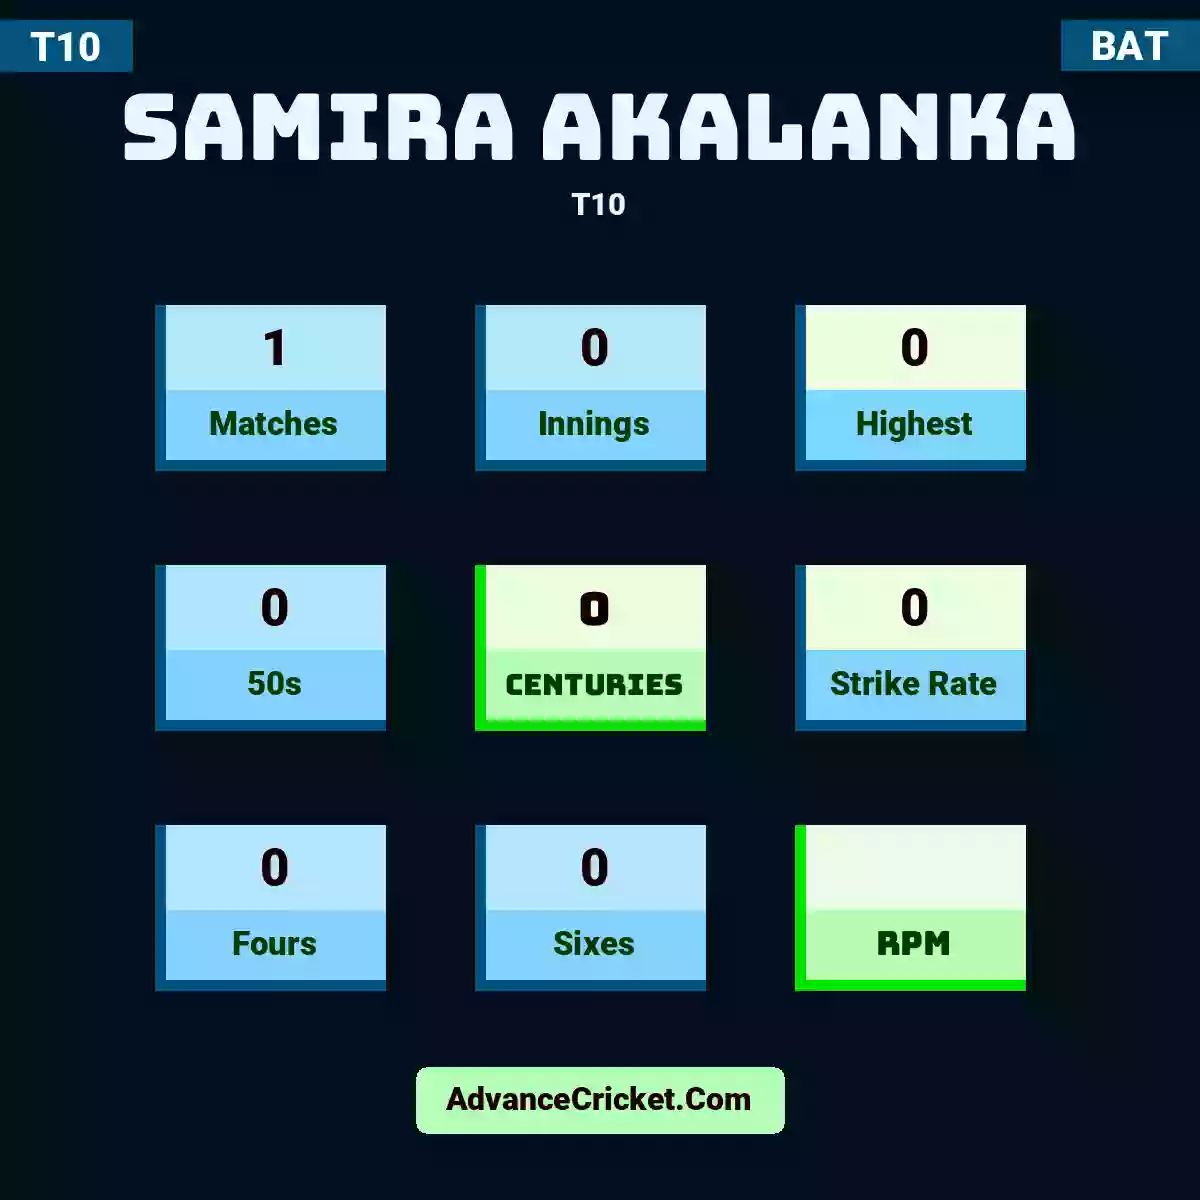 Samira Akalanka T10 , Samira Akalanka played 1 matches, scored 0 runs as highest, 0 half-centuries, and 0 centuries, with a strike rate of 0. S.Akalanka hit 0 fours and 0 sixes.